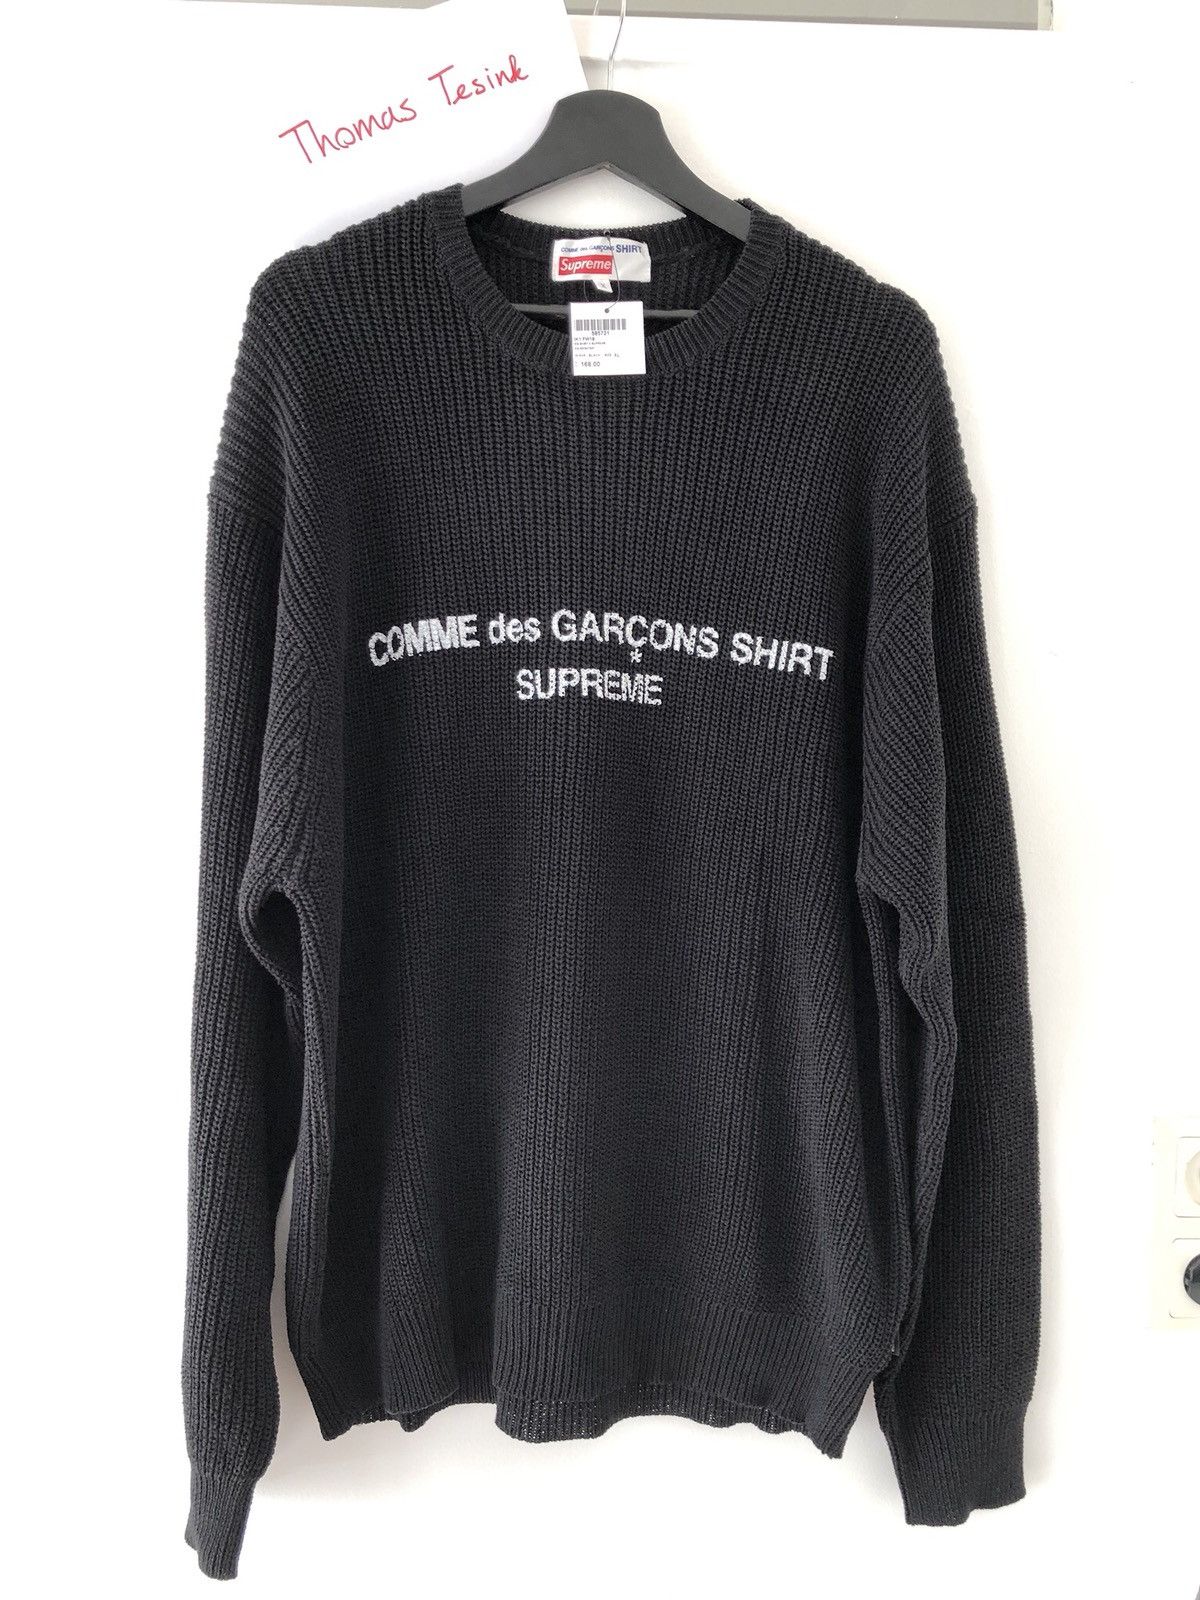 Supreme Supreme x Comme Des Garcons (CDG) Sweater | Grailed